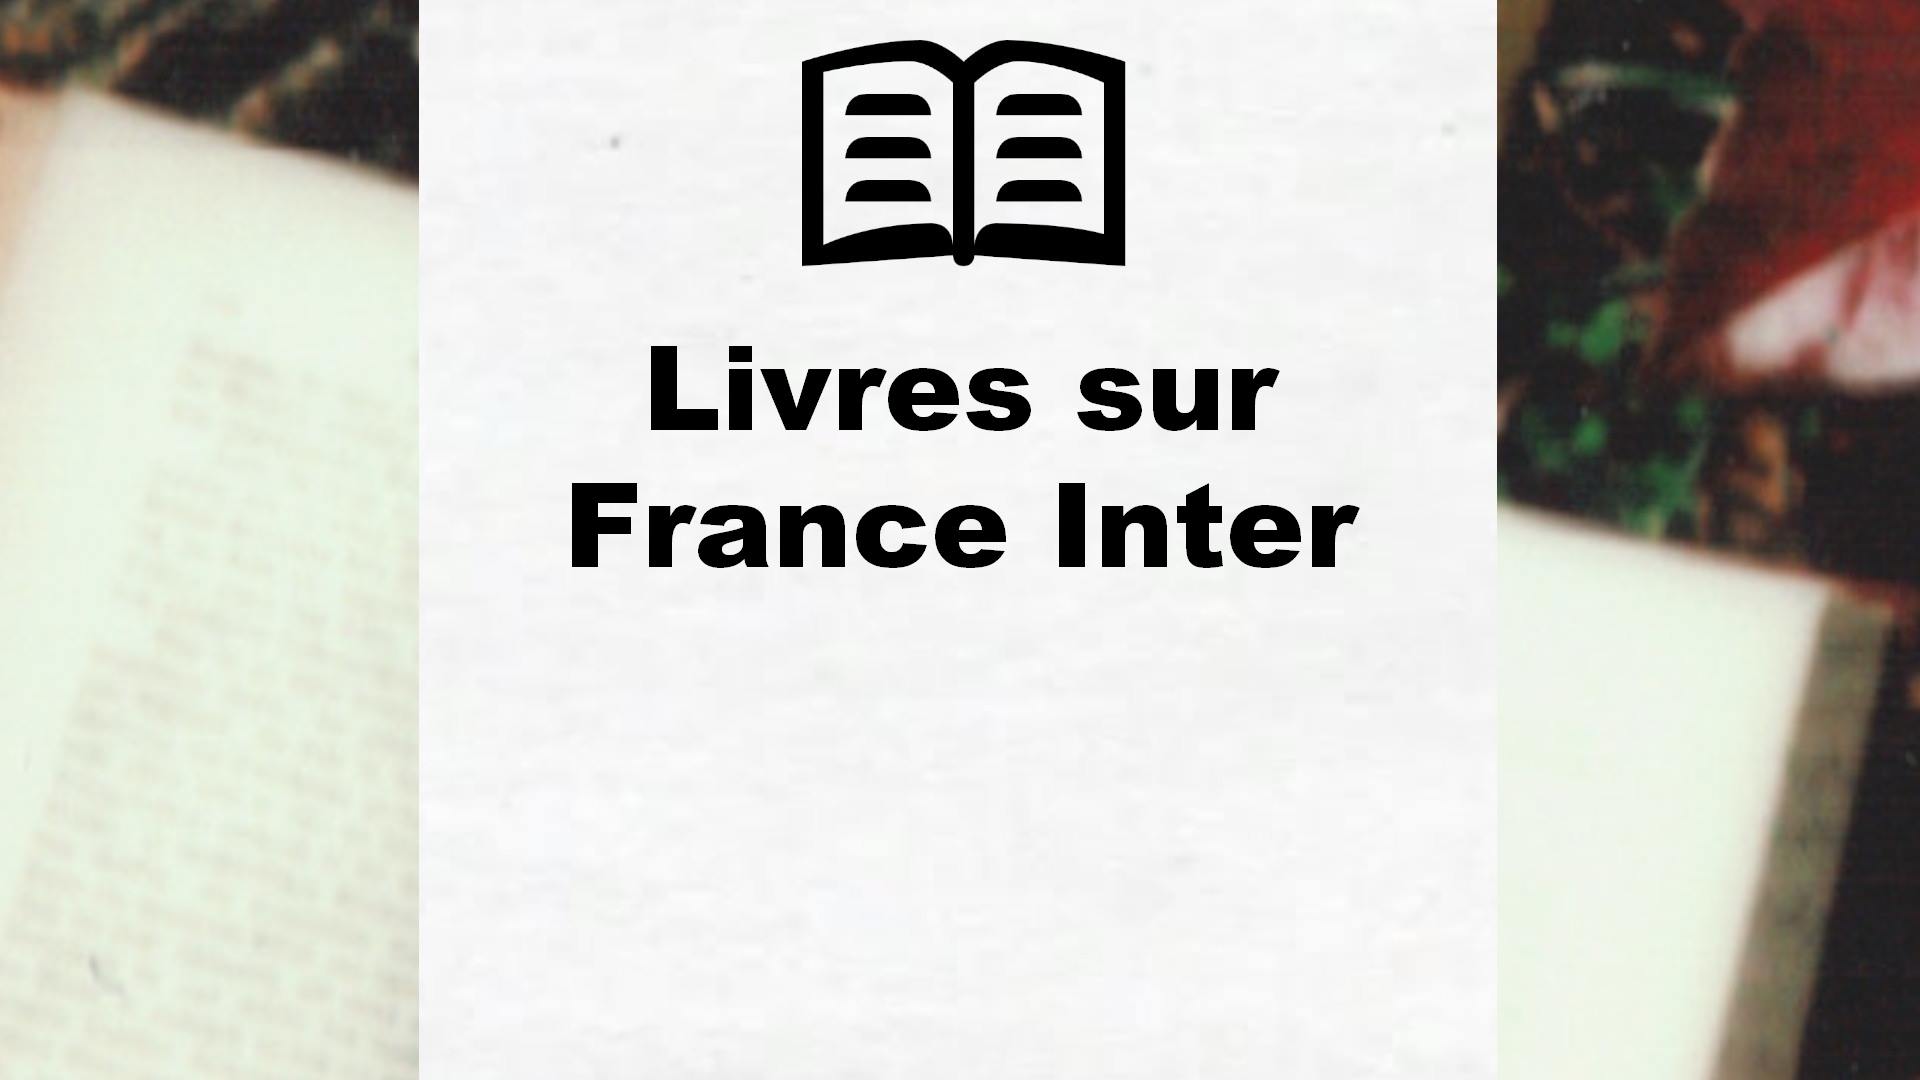 Livres sur France Inter